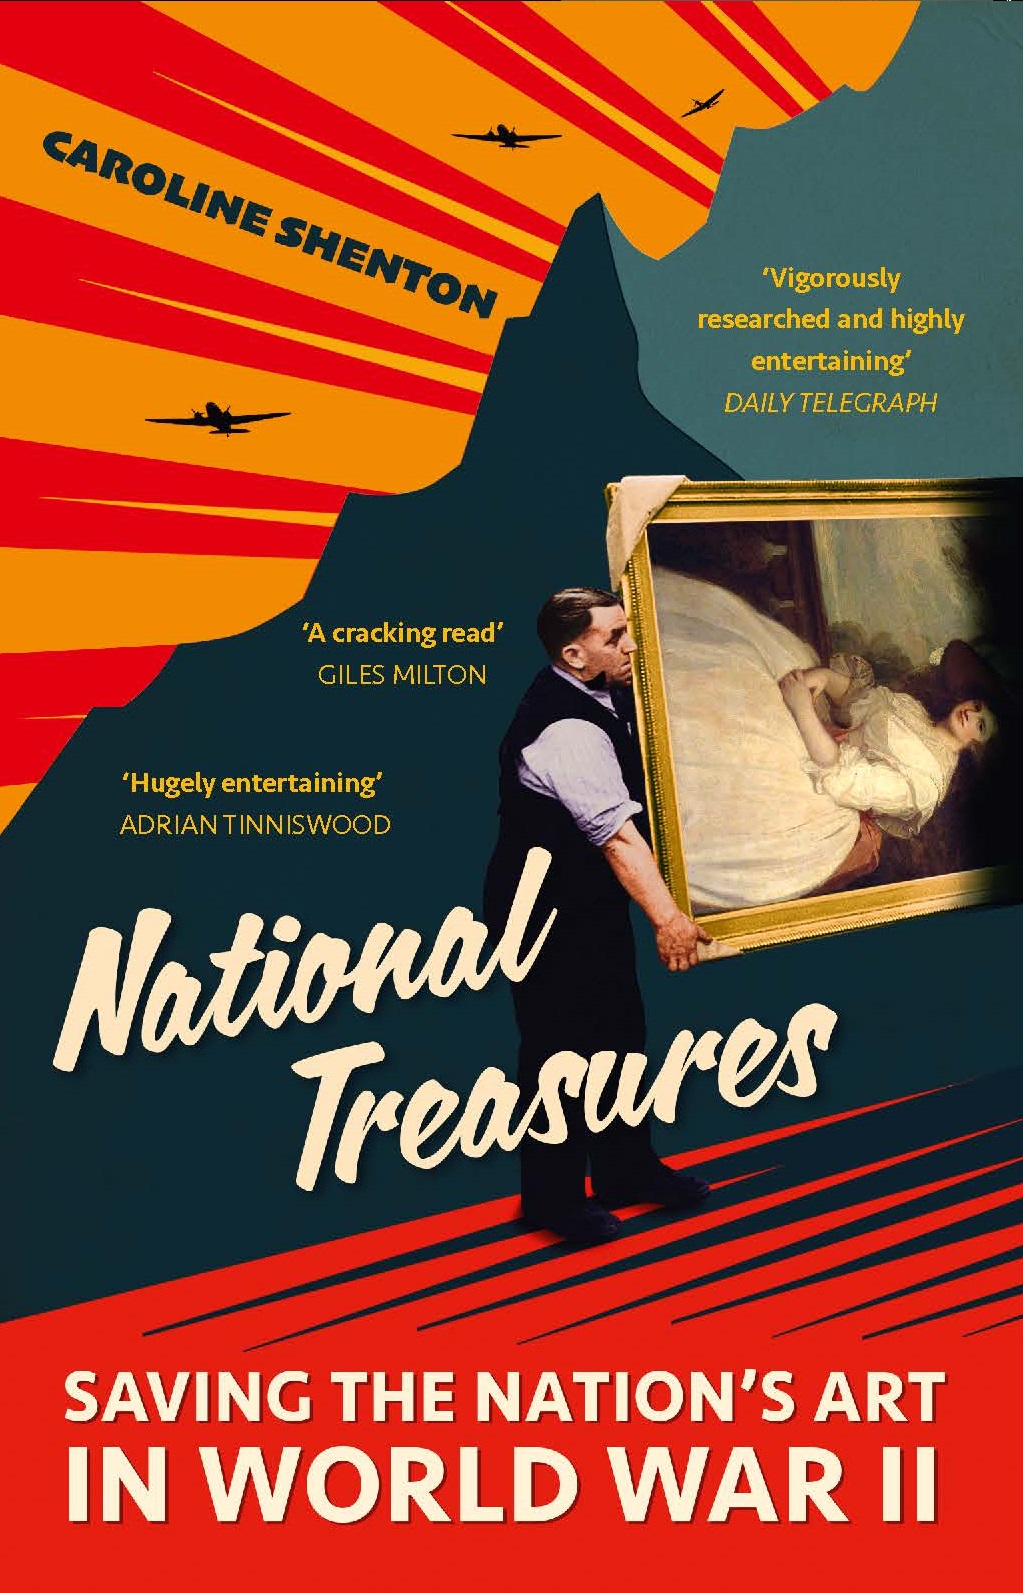 Caroline Shenton's National Treasures paperback cover